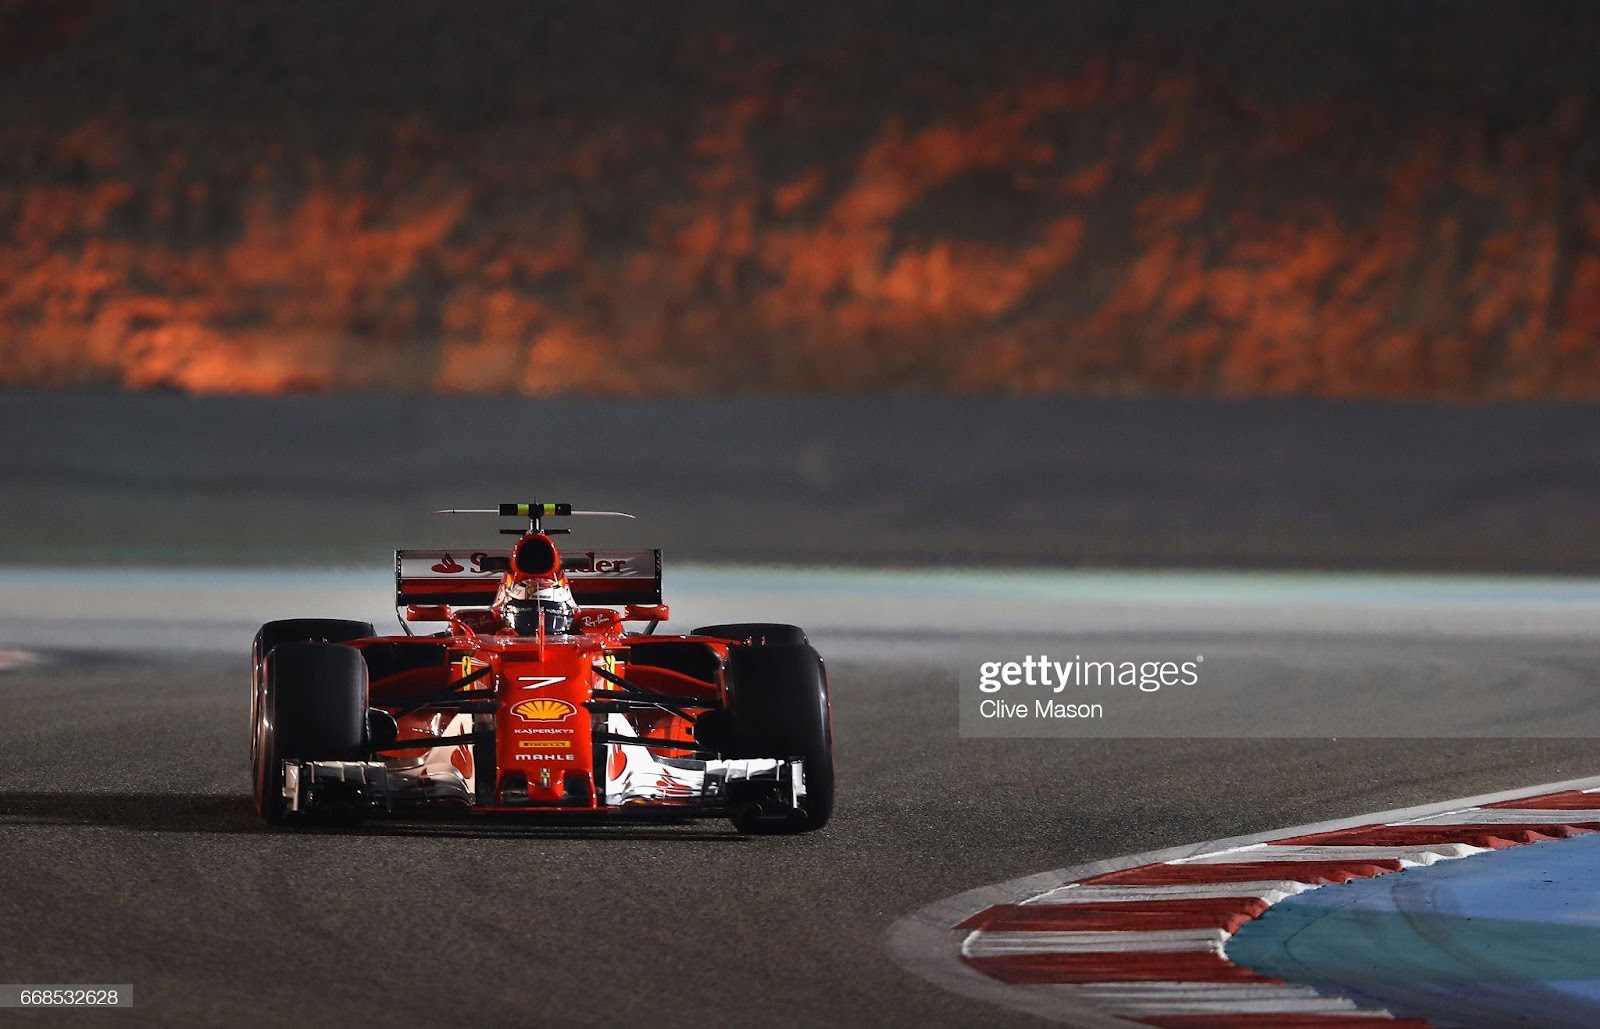 Kimi Raikkonen driving the (7) Scuderia Ferrari SF70H on track during practice for the Bahrain F1 Grand Prix at Bahrain International Circuit on April 14, 2017.